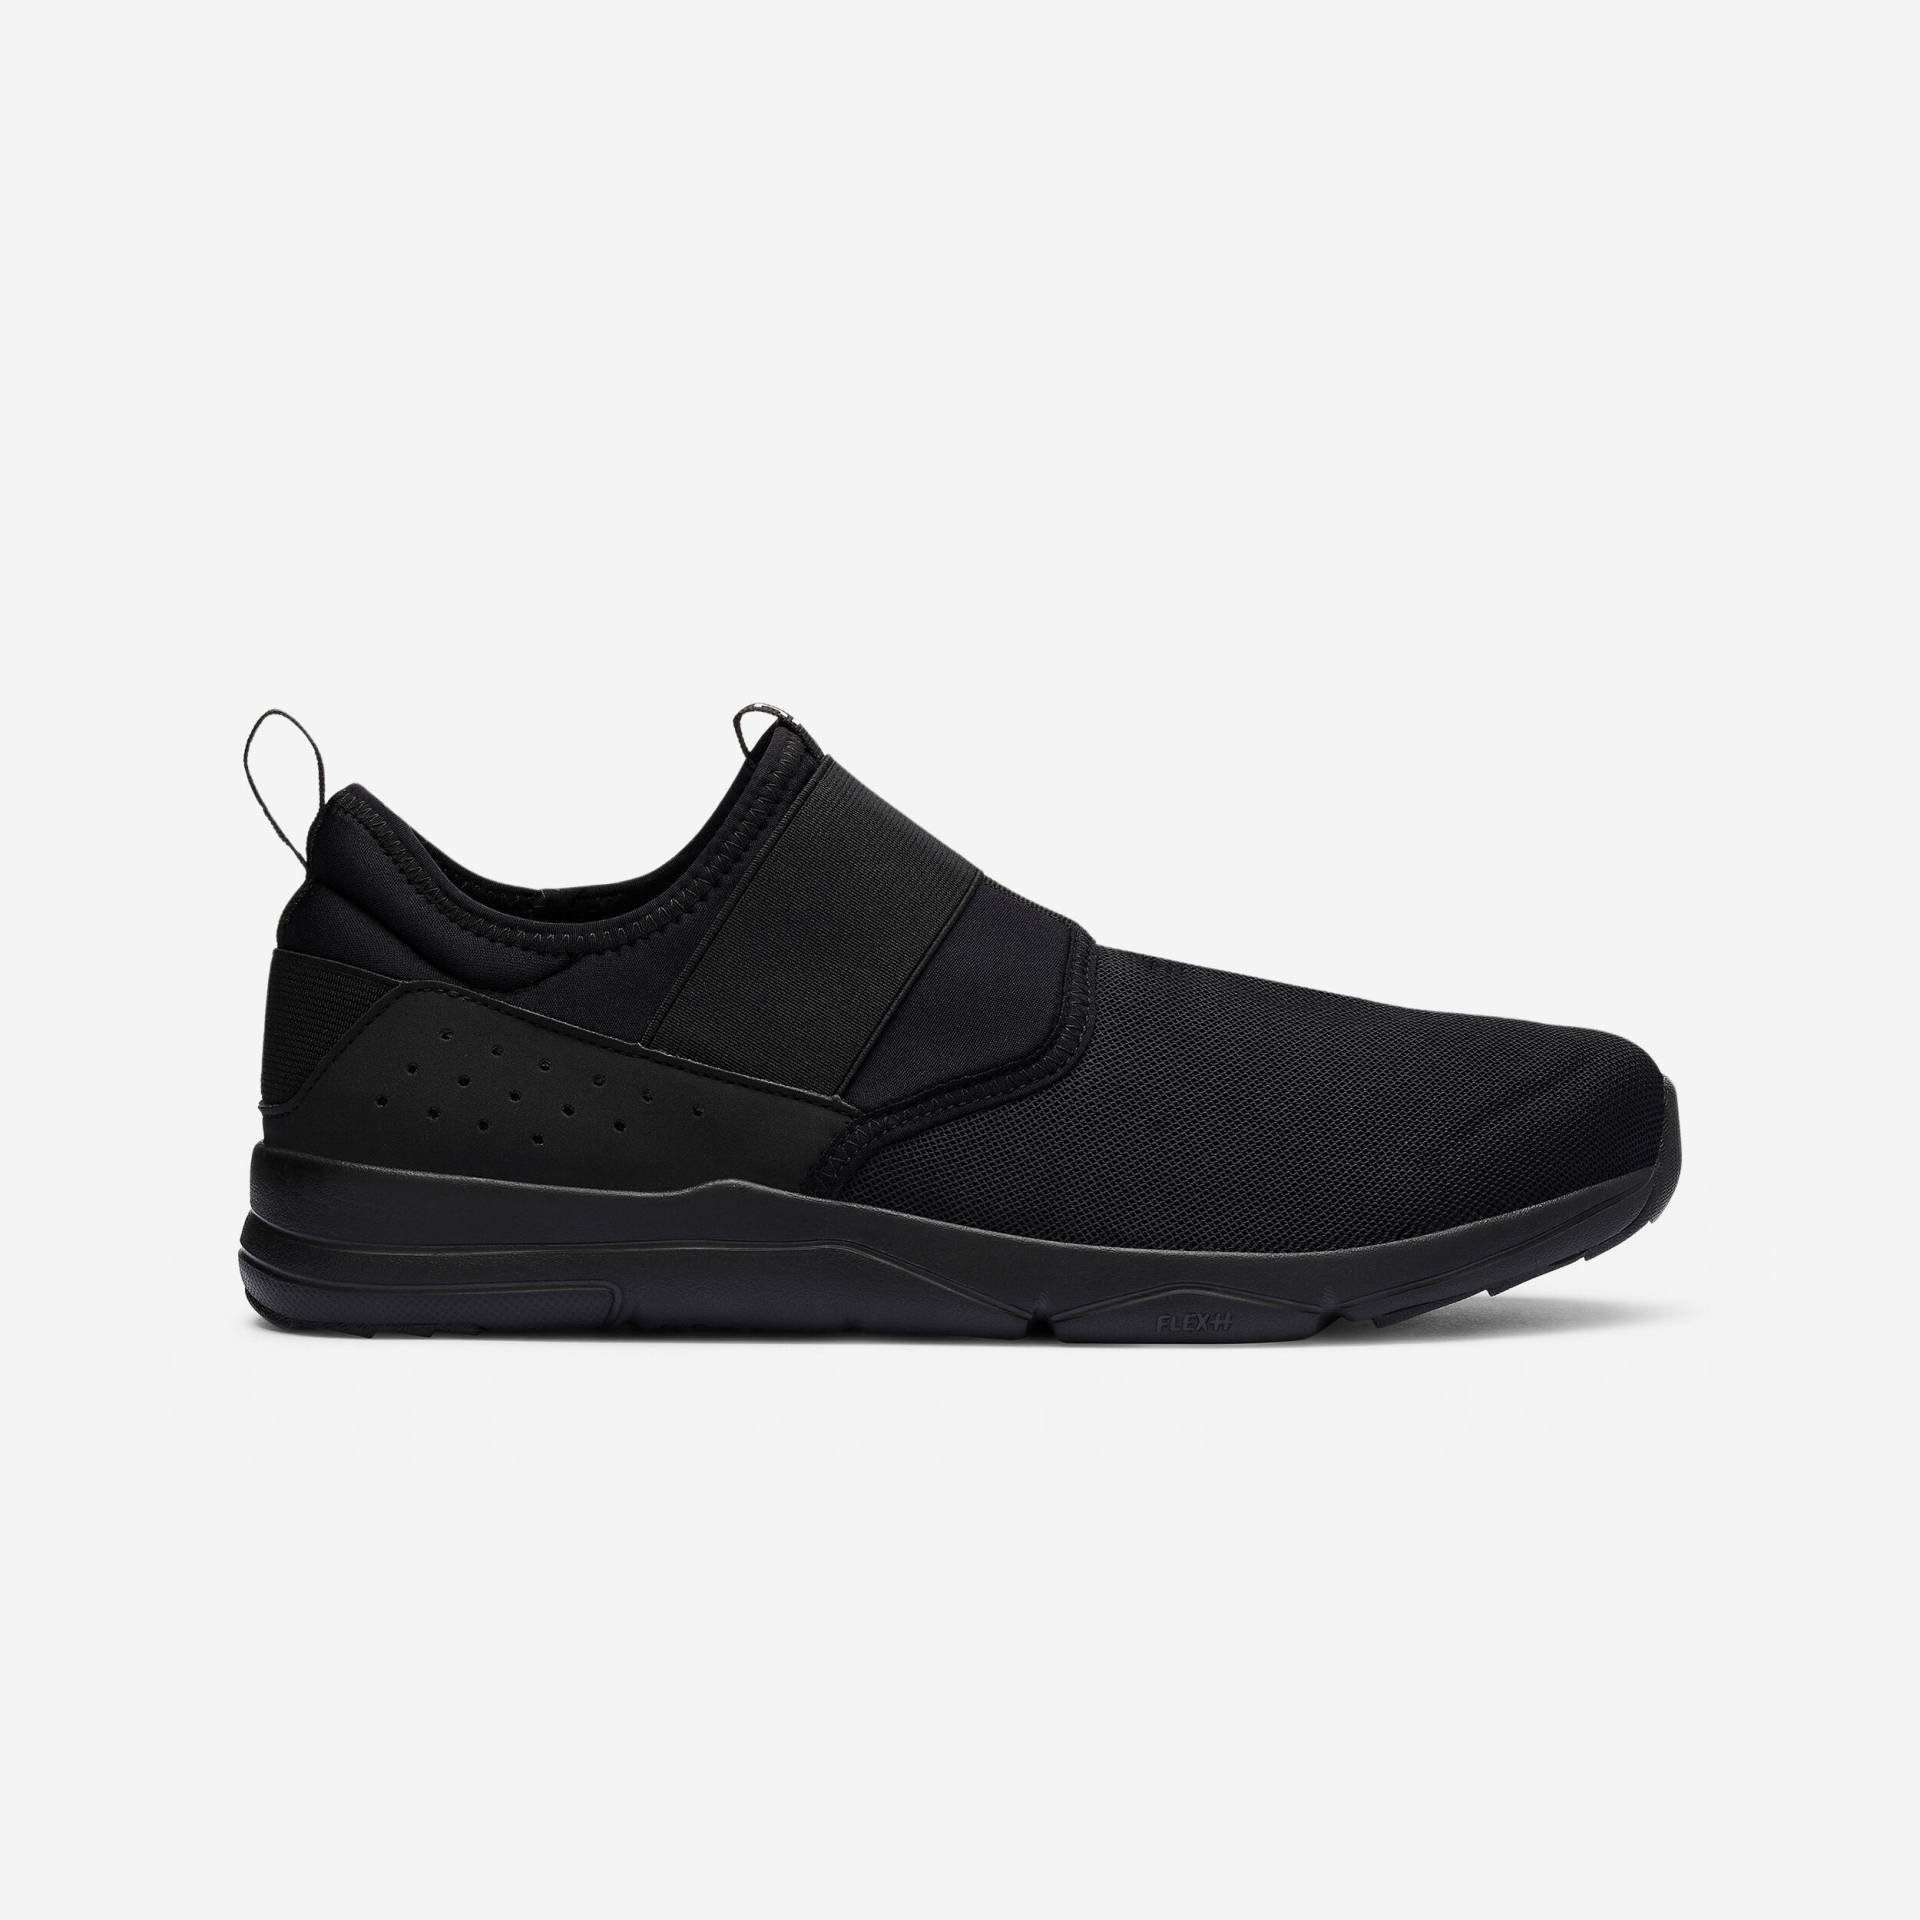 Power Walking Schuhe Sneaker Herren Slip On - PW 160 schwarz von NEWFEEL